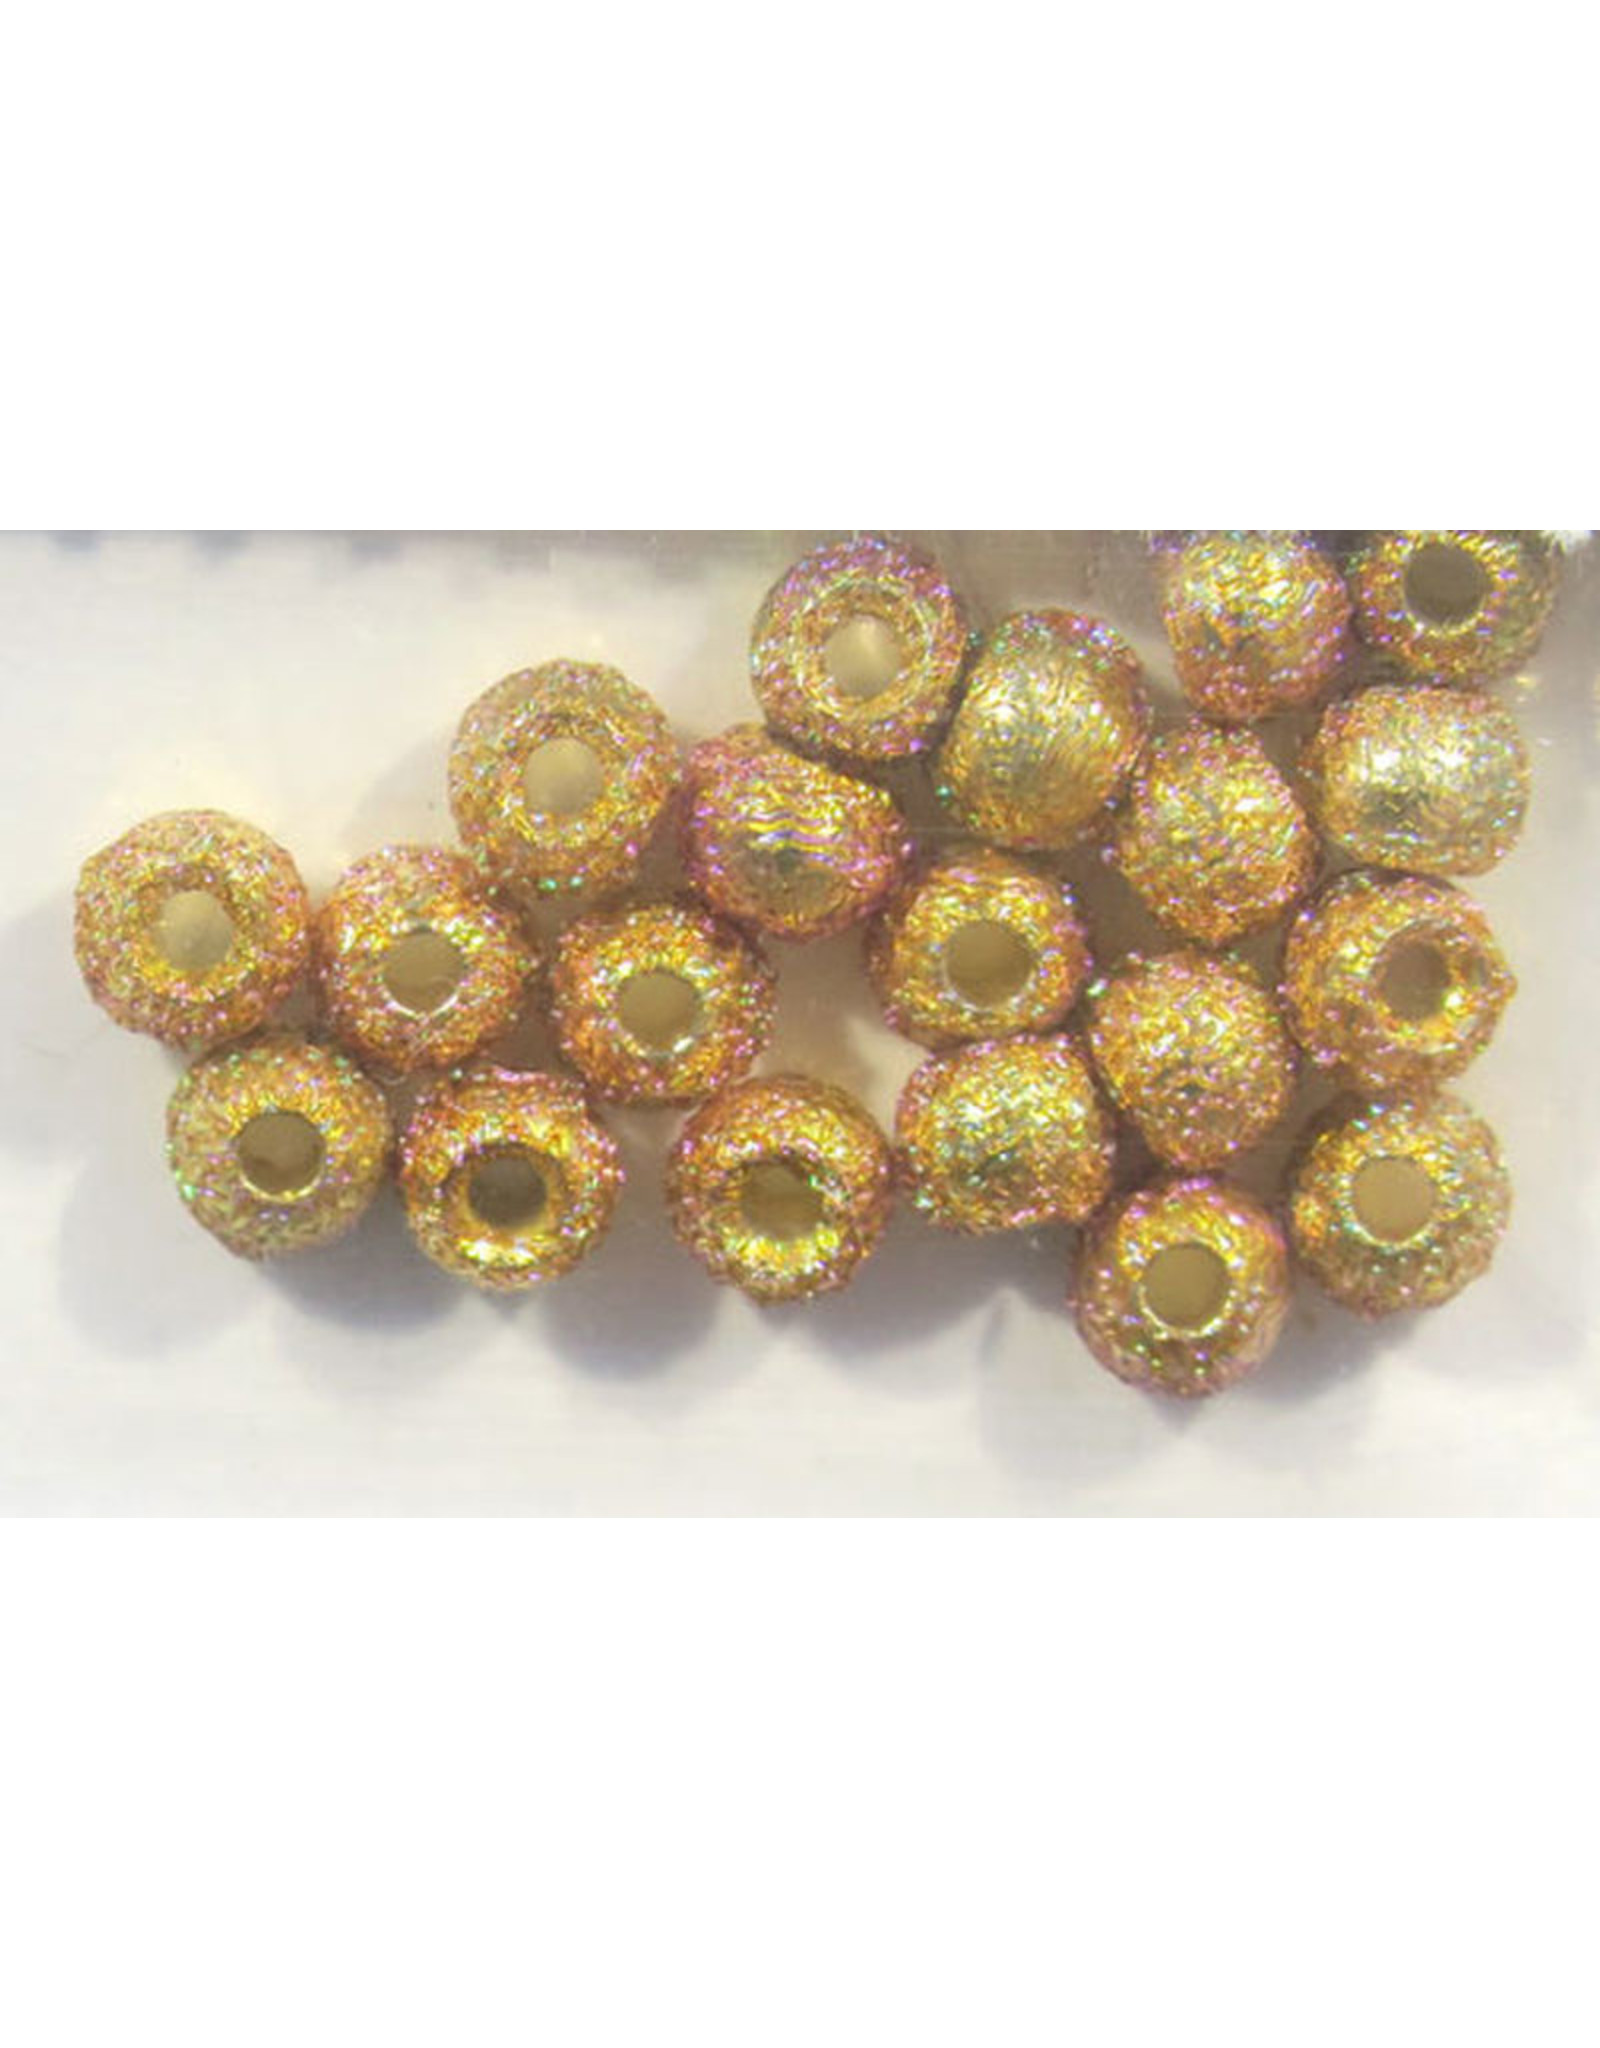 HARELINE Gritty Tungsten Beads